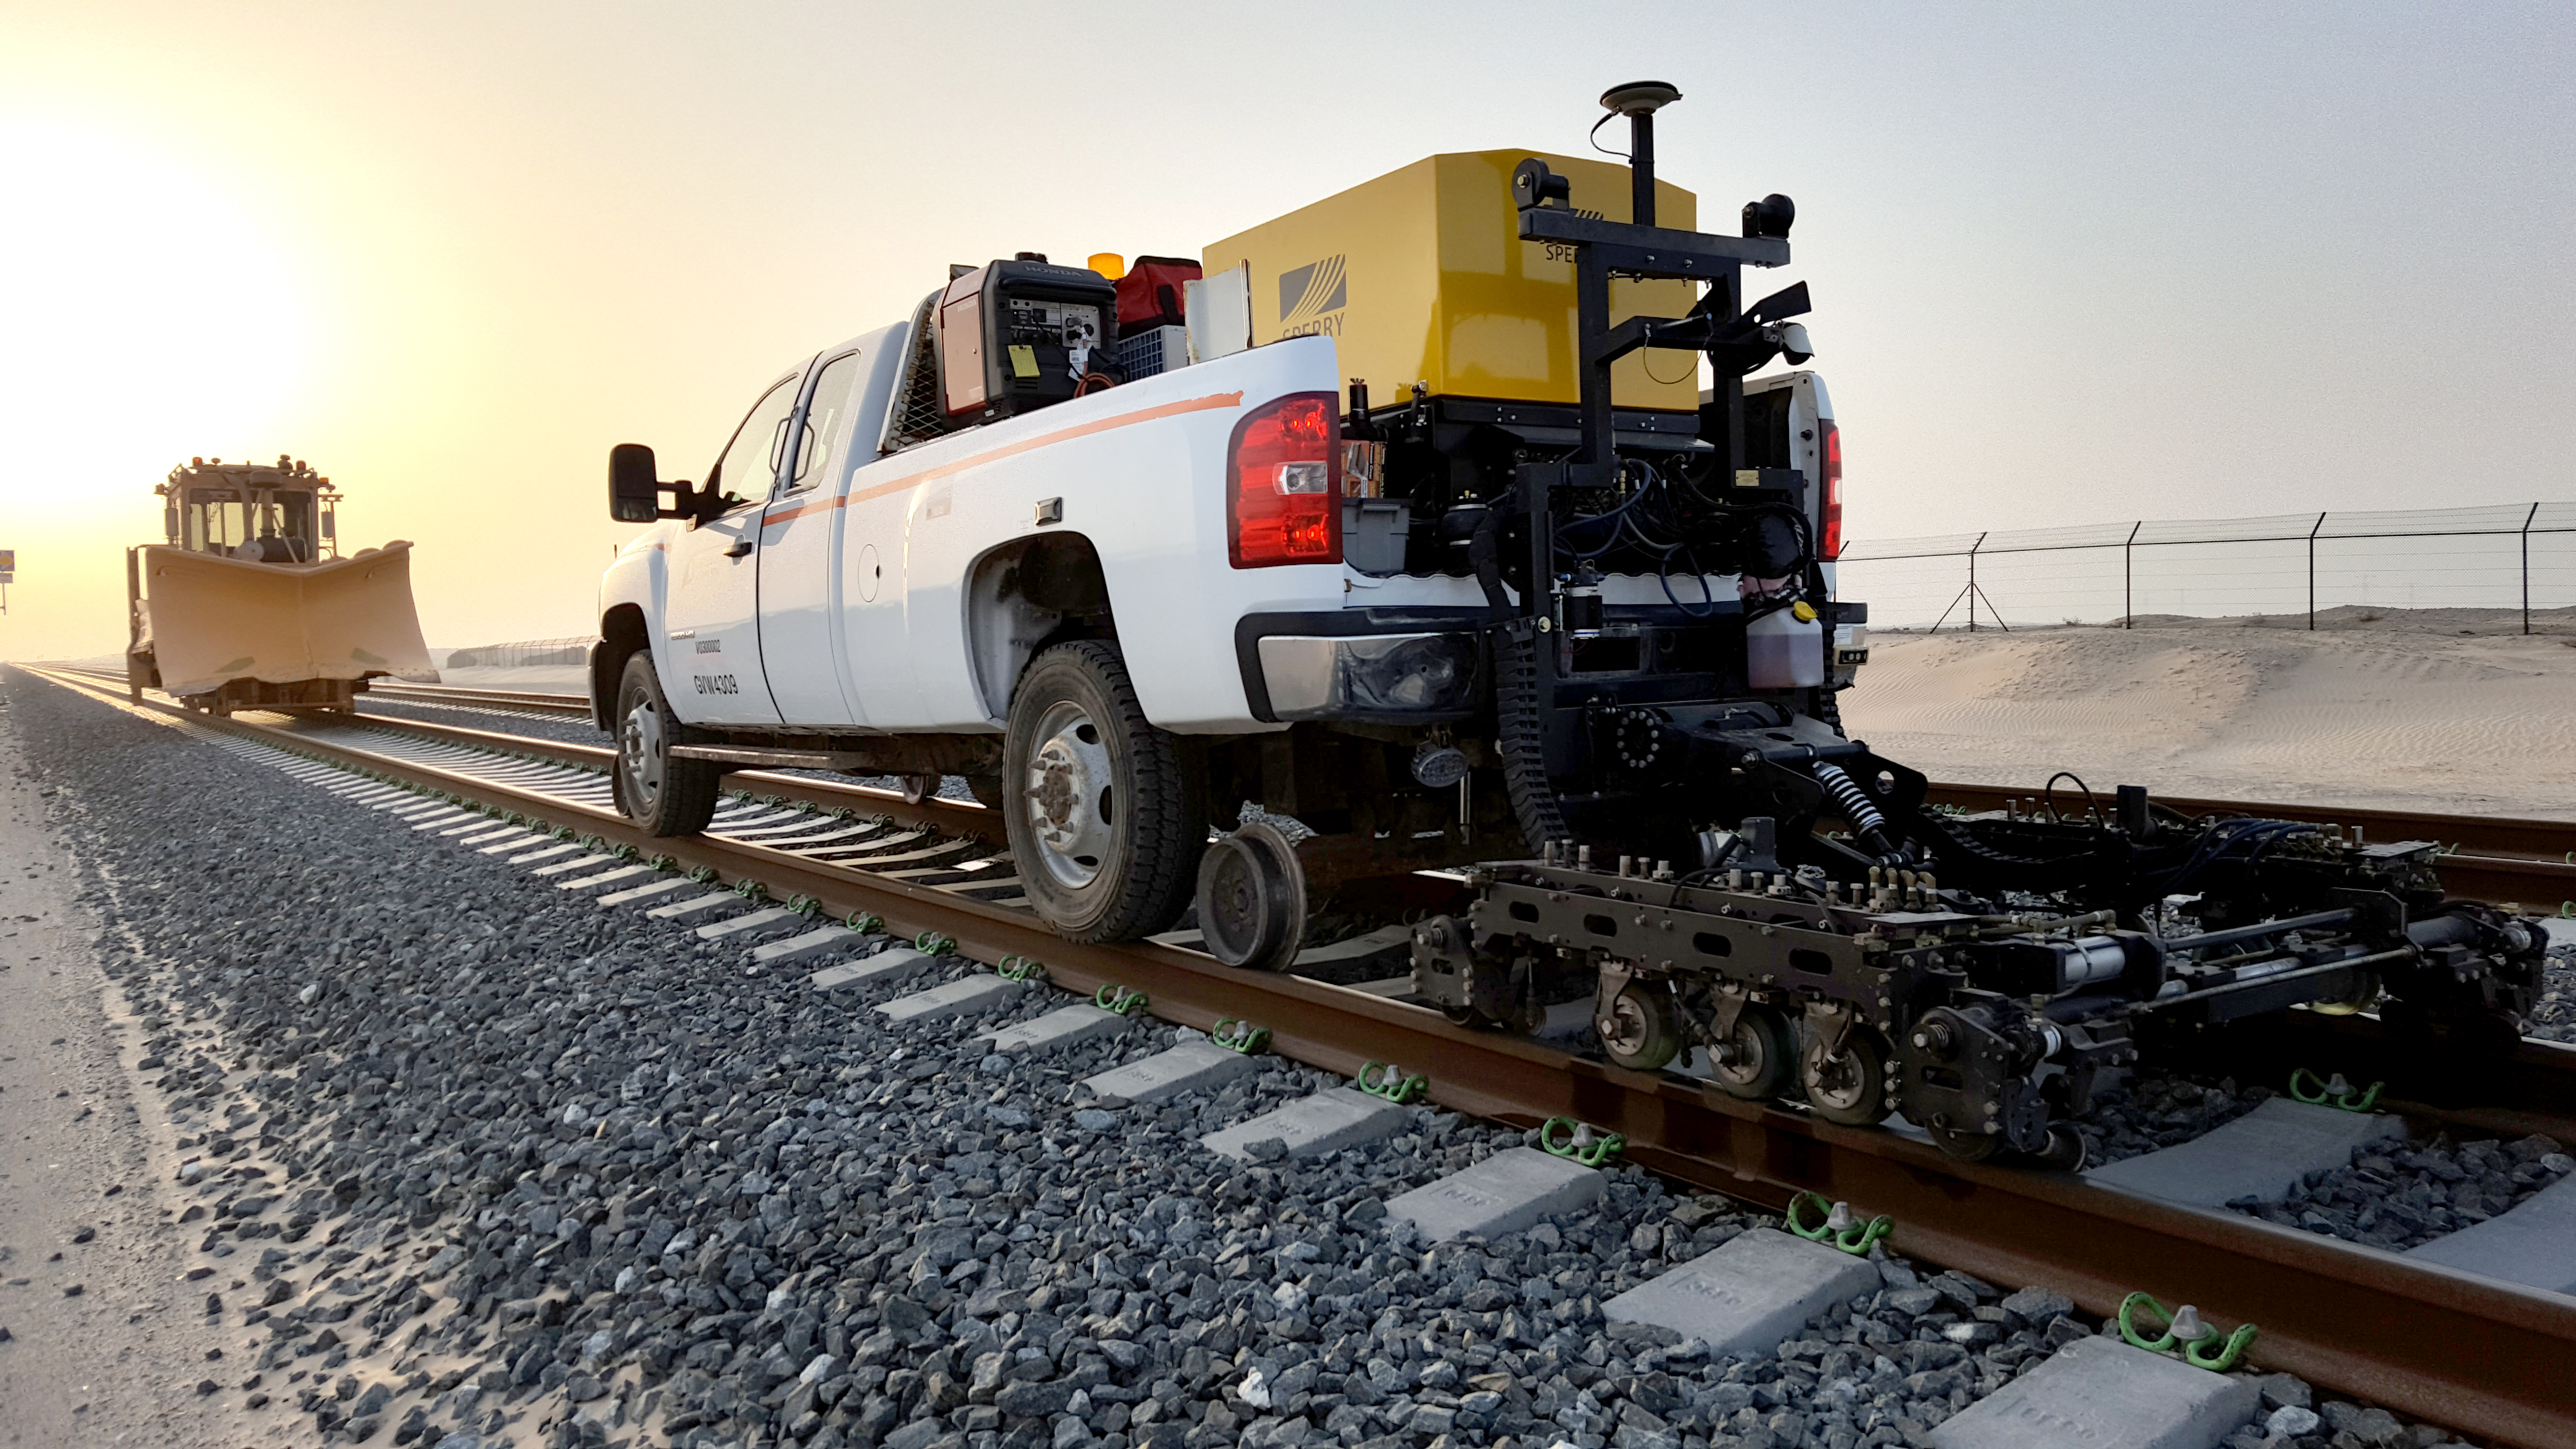 Rail and Track Testing